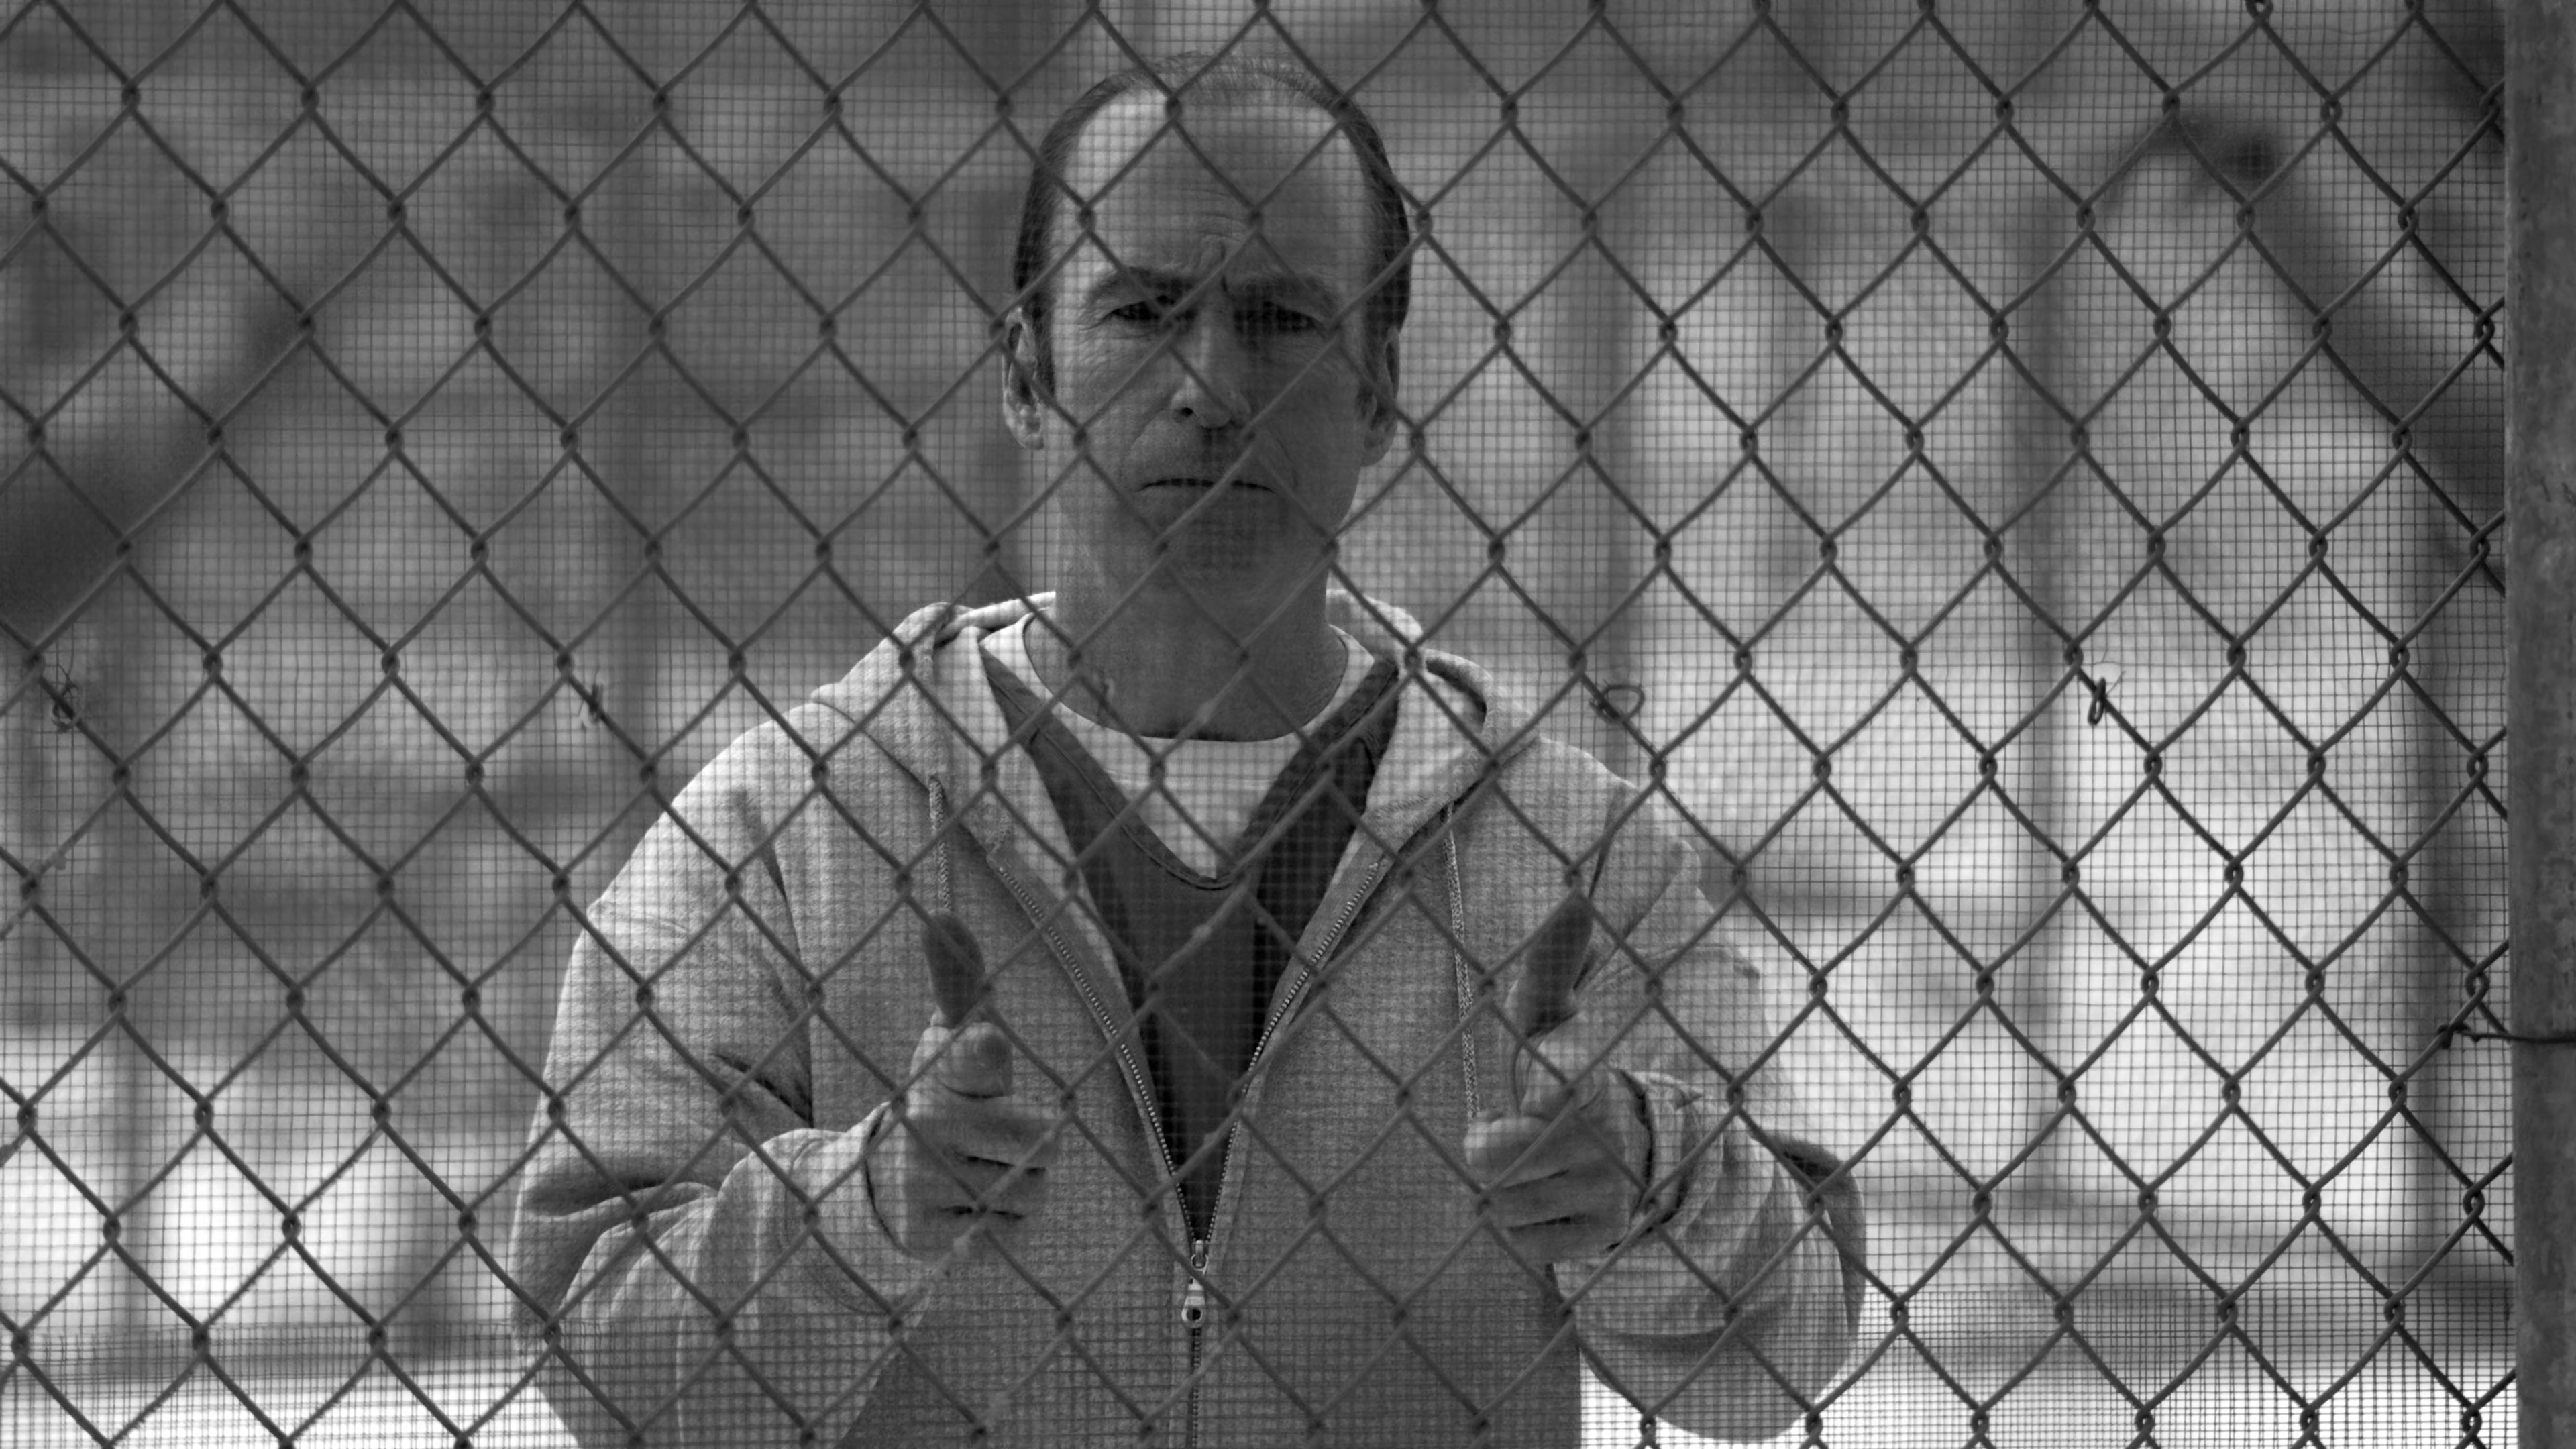 People 3840x2160 Saul Goodman Better Call Saul Jimmy McGill prison prisoners monochrome dark men actor TV series